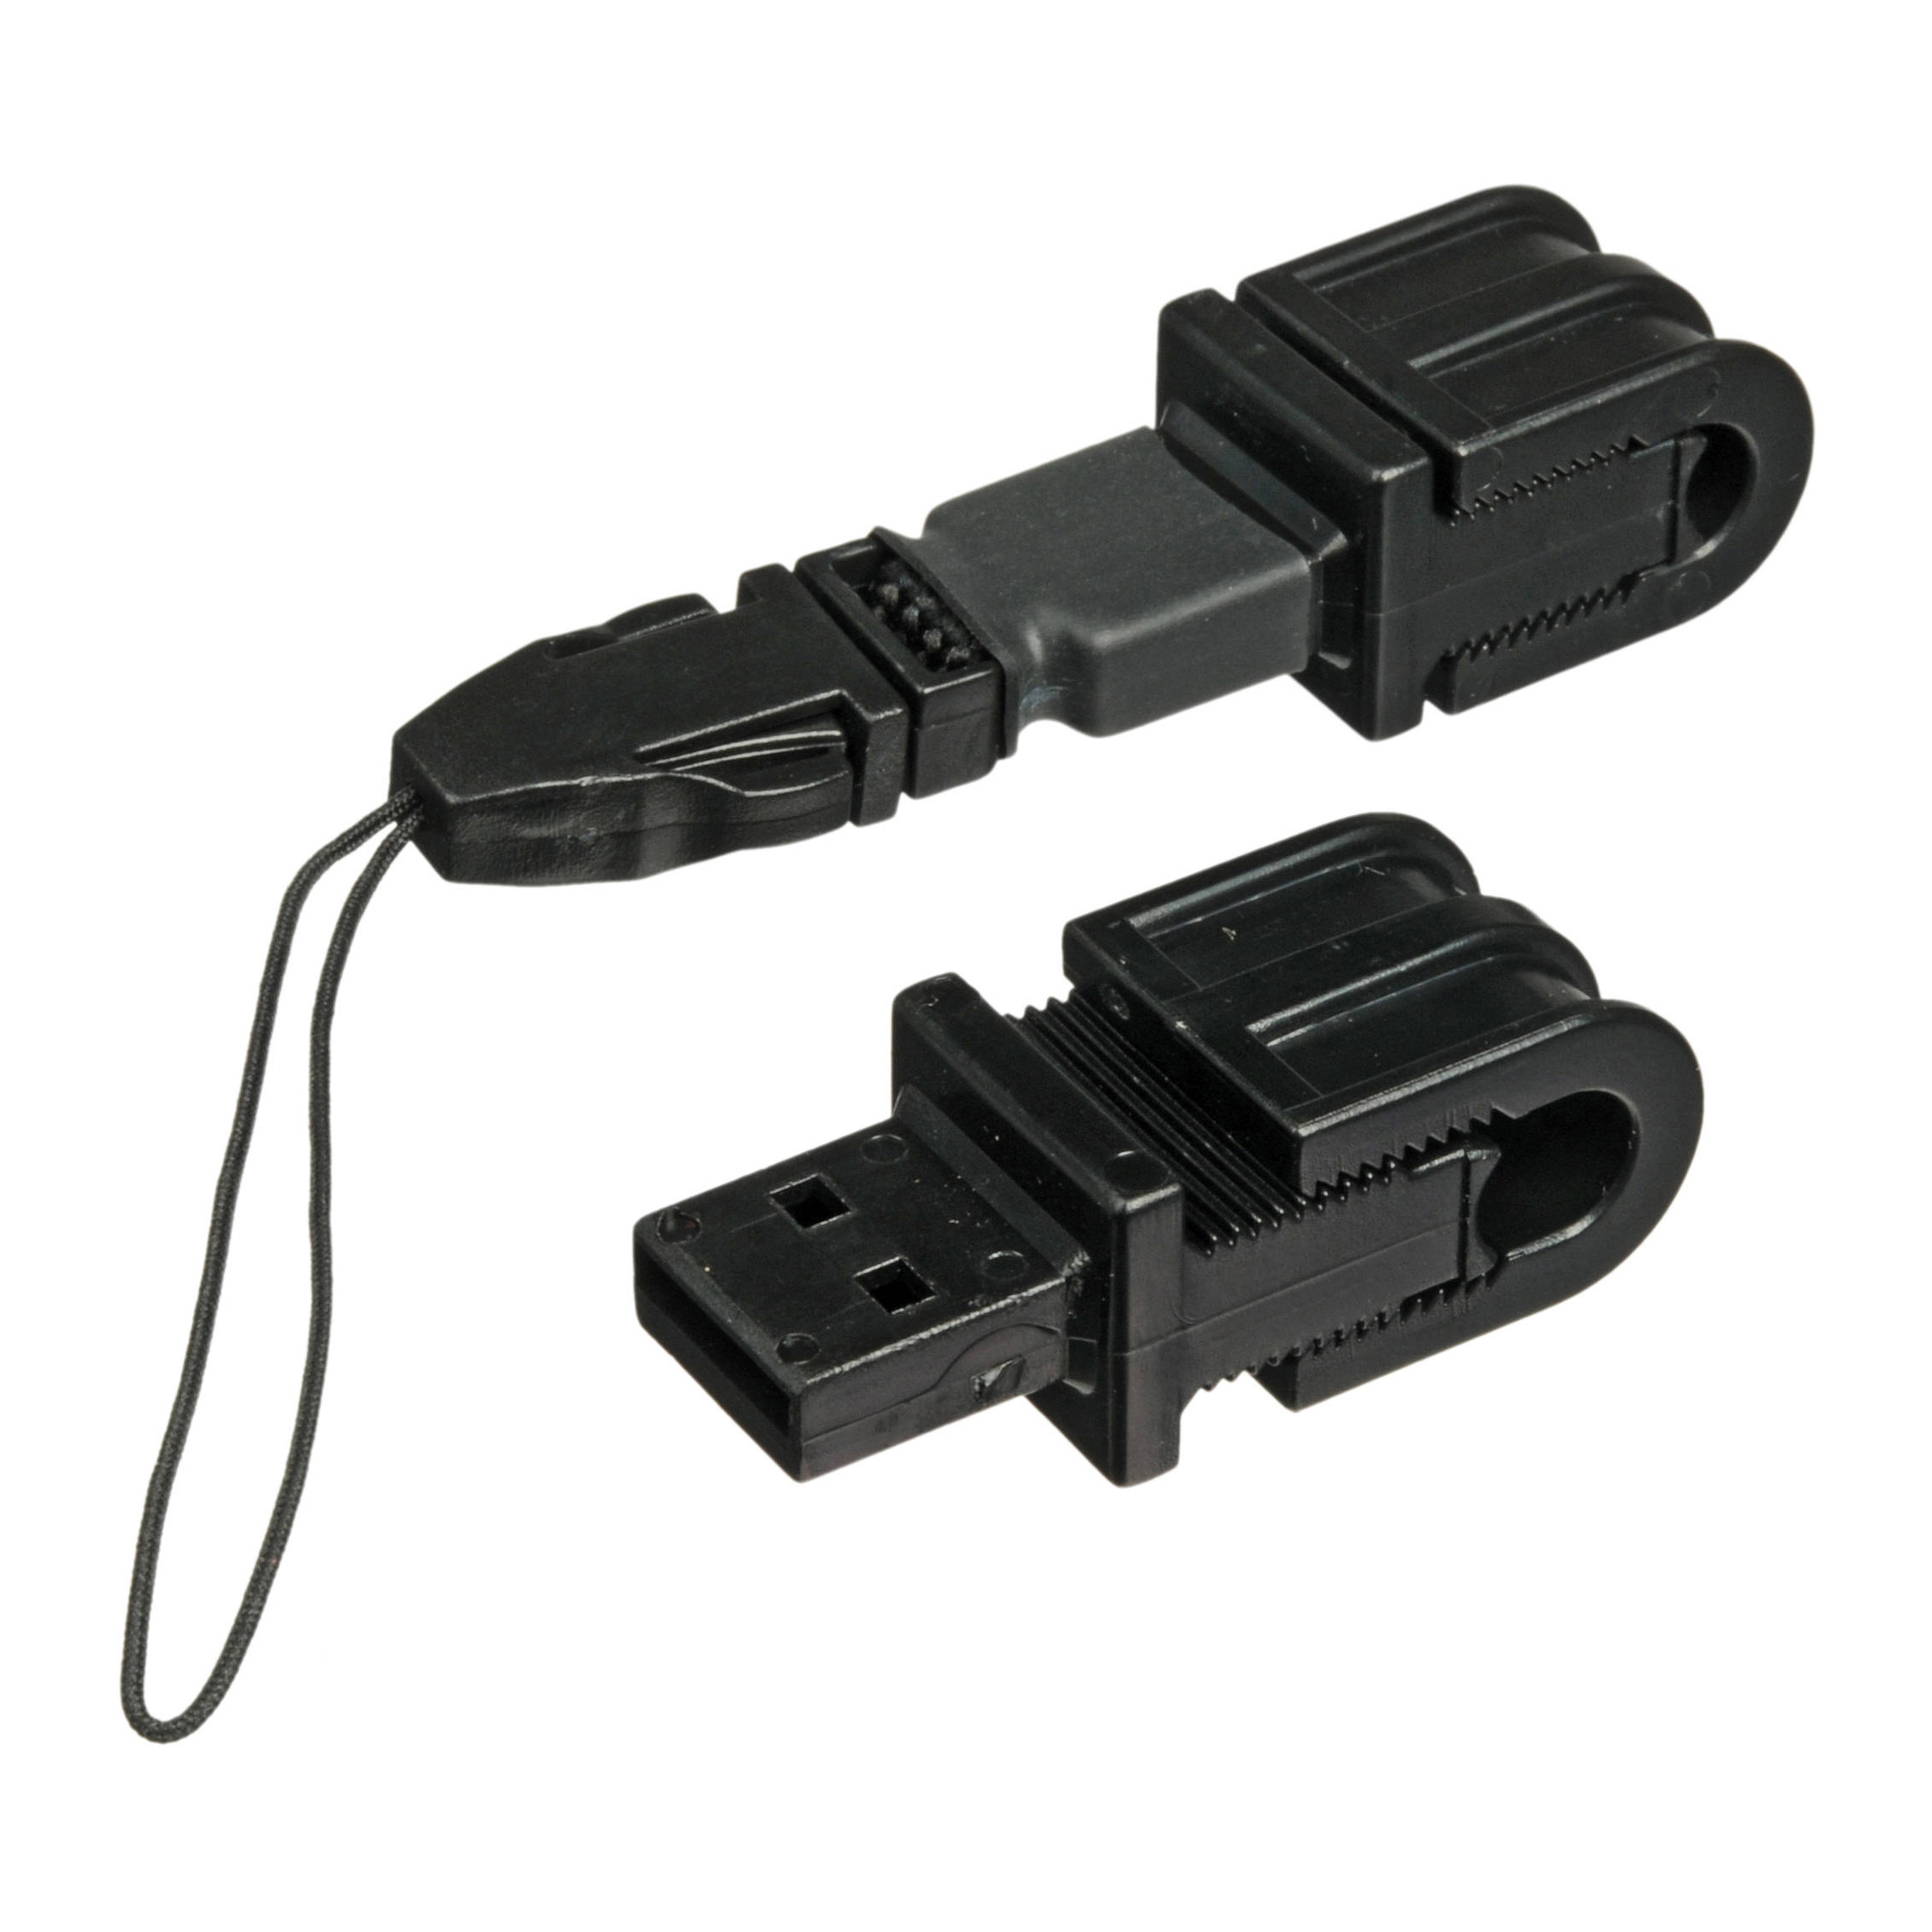 Kit de sujetadores de cable Tether Tools JerkStopper JS098 para cámara y USB